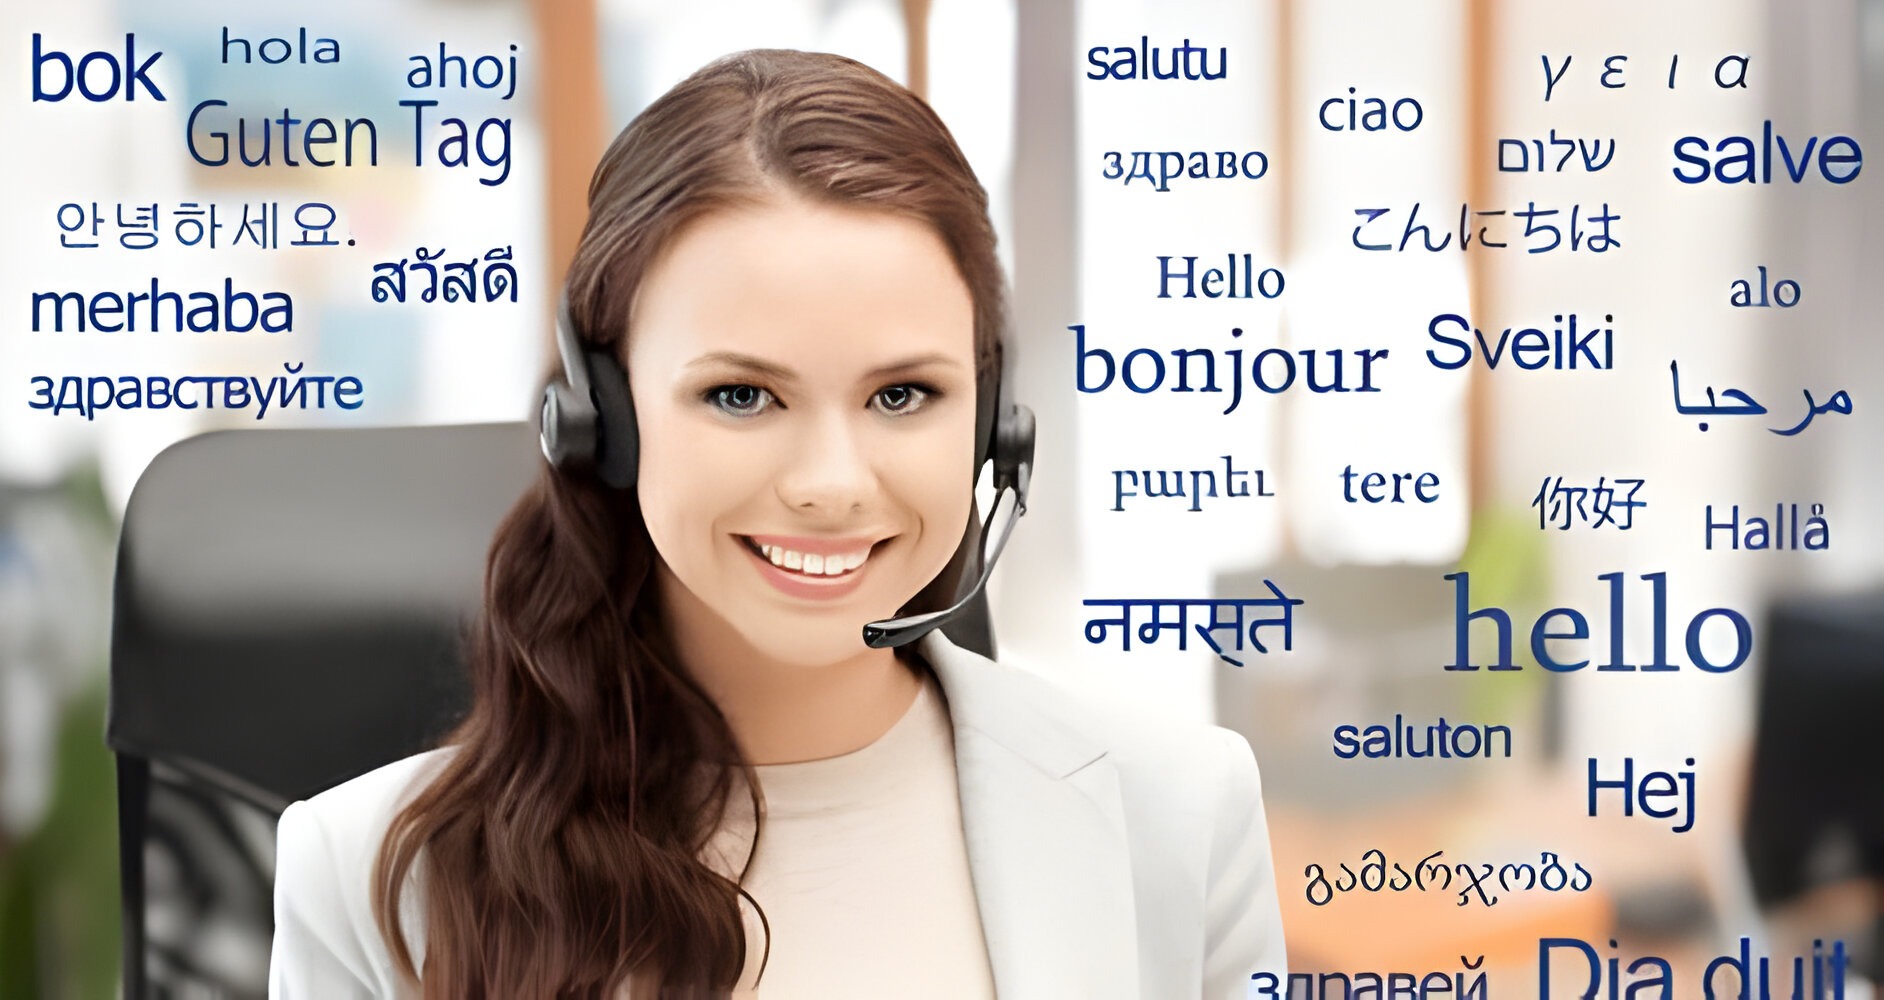 Translation Services in Dubai